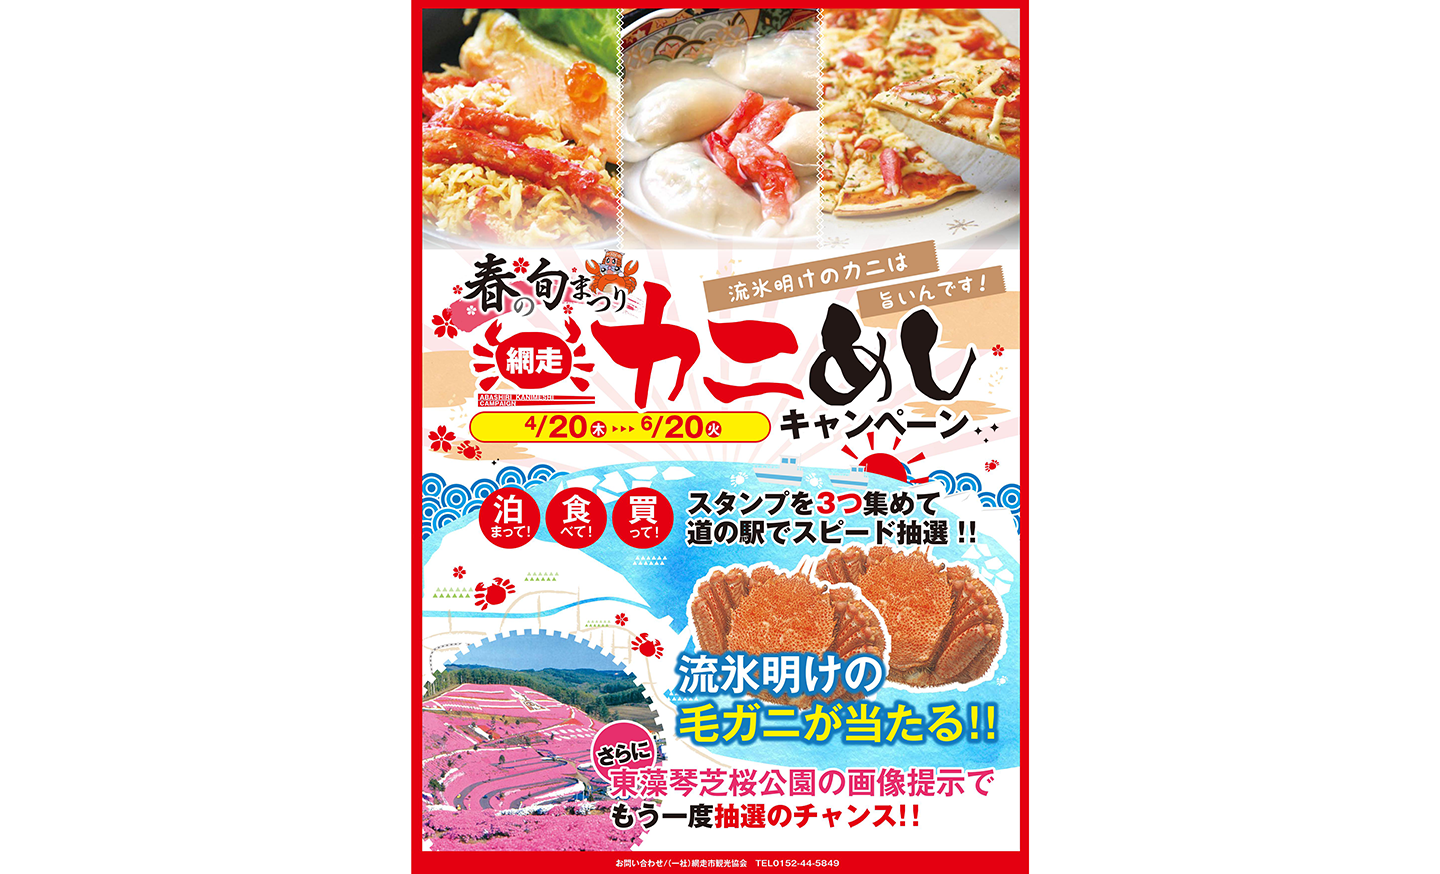 Abashiri Crab Rice Campaign